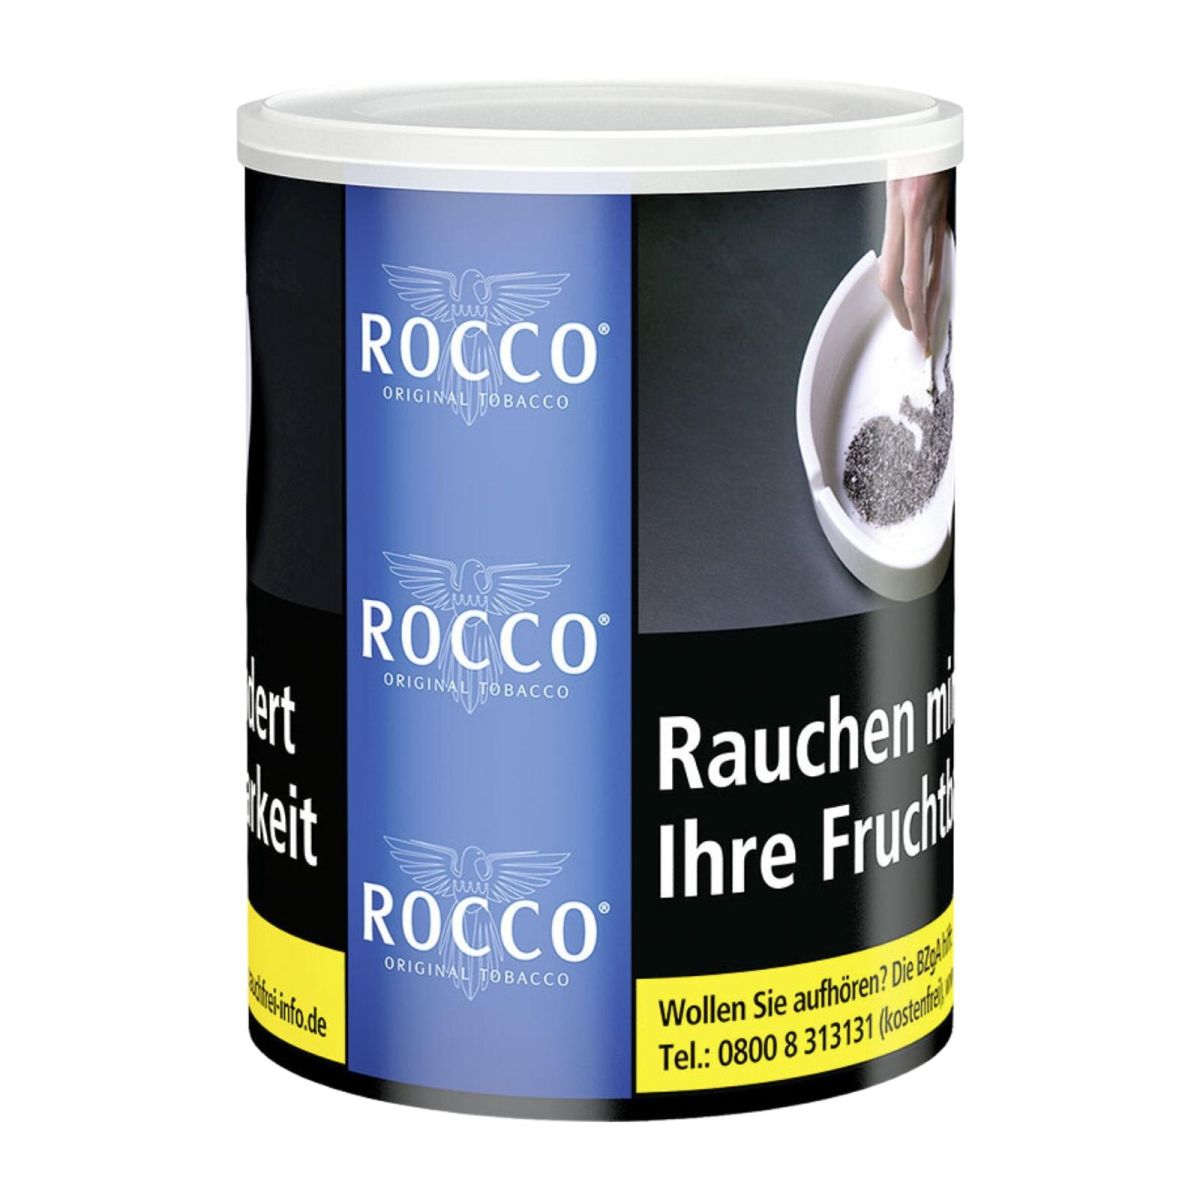 Rocco Rocco Original Tobacco bei www.Tabakring.de kaufen